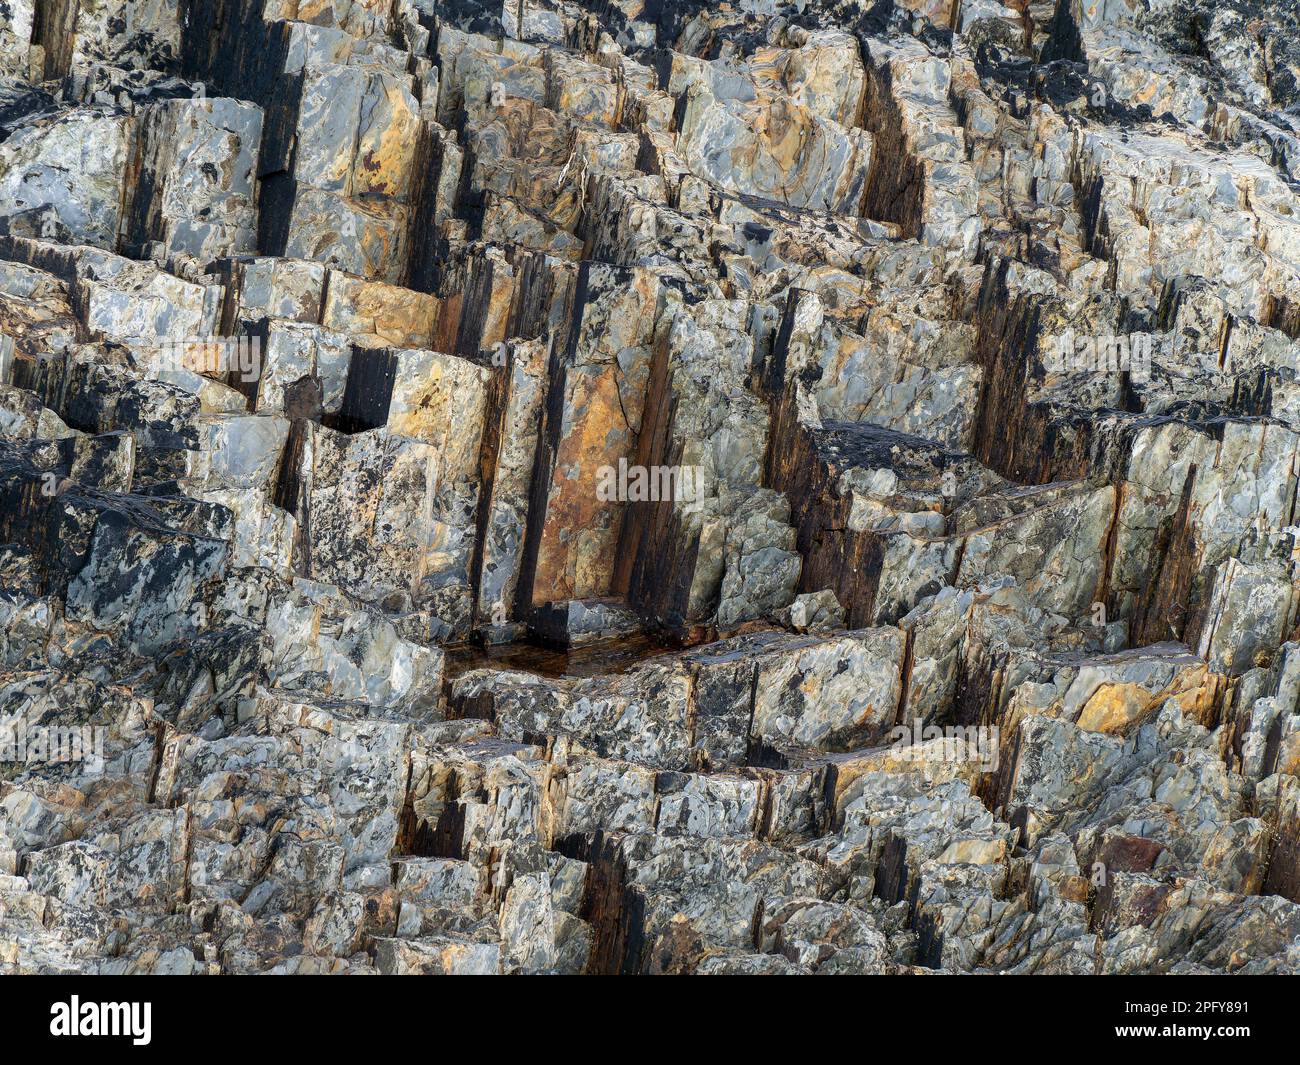 https://c8.alamy.com/comp/2PFY891/rock-pattern-stone-background-natural-rock-formation-layered-rock-on-a-background-2PFY891.jpg